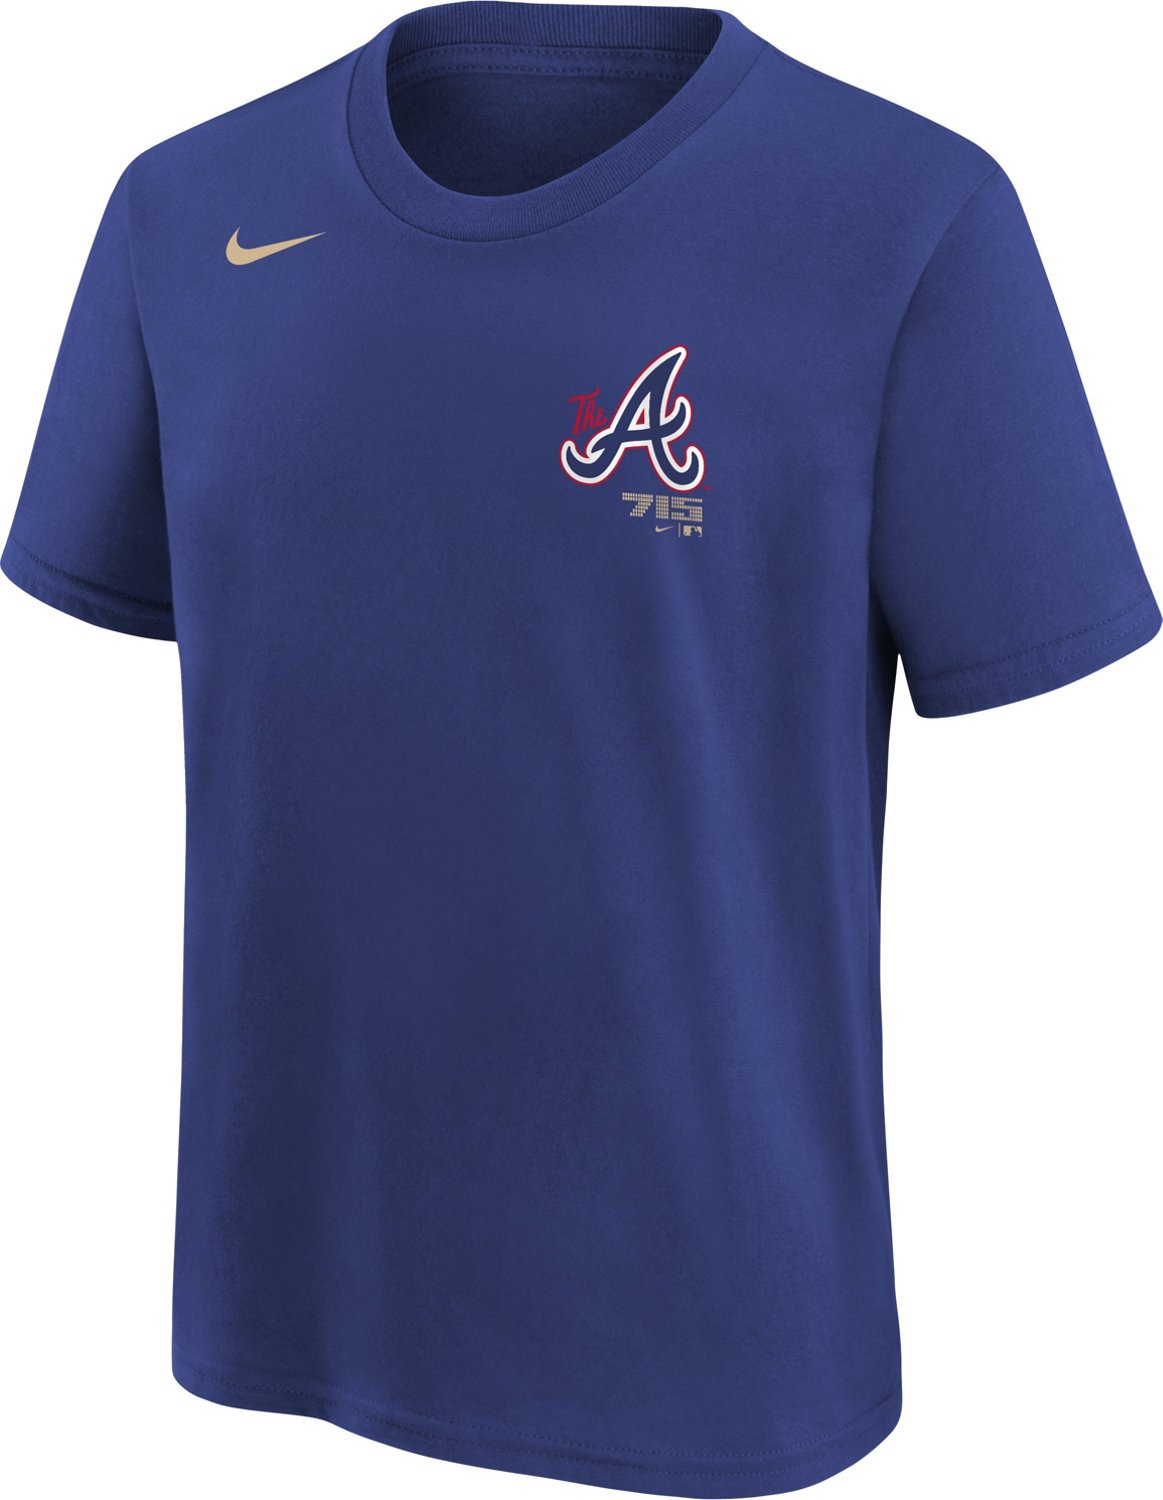 Nike Boys’ Atlanta Braves Wordmark Graphic T-Shirt Navy Blue, 20 Youth - MLB Youth at Academy Sports